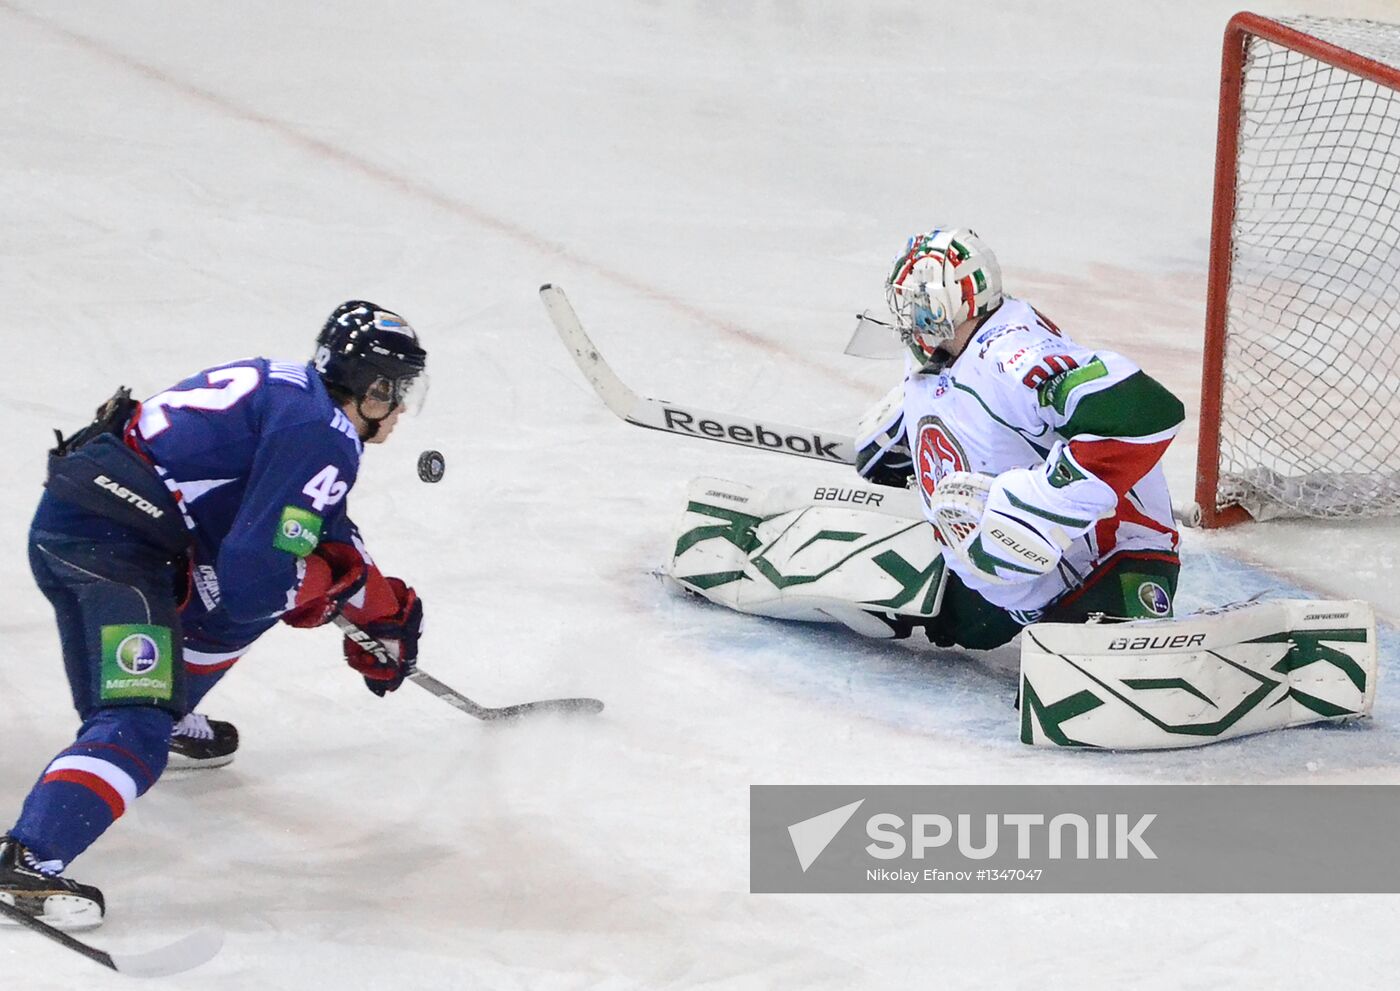 Kontinental Hockey League. Metallurg Magnitogorsk vs. Ak Bars